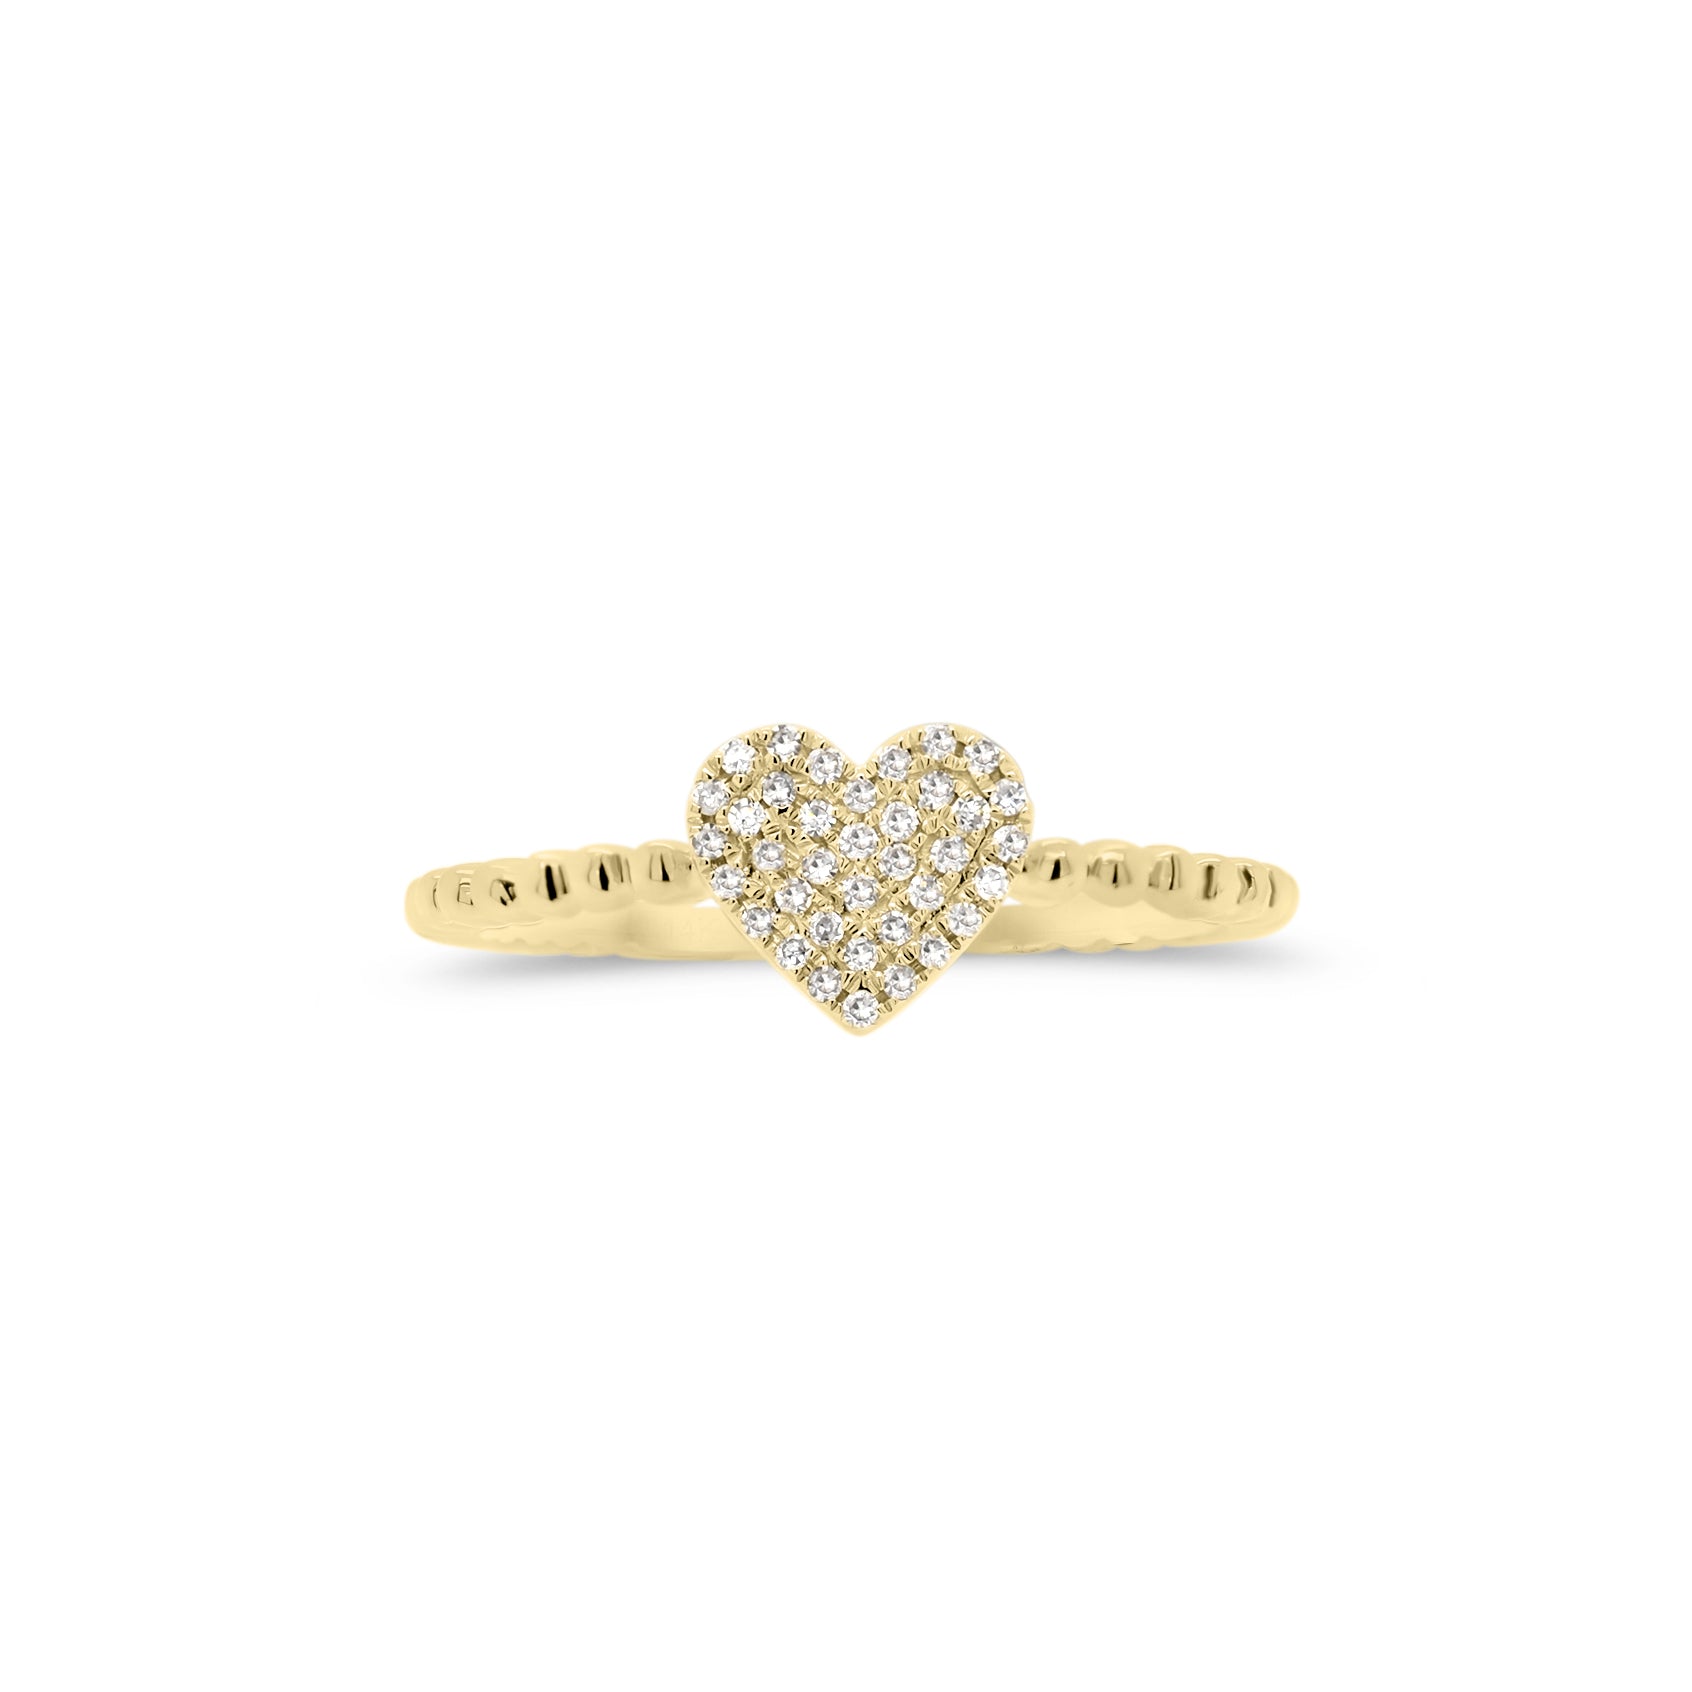 Diamond Heart Ring  - 14K gold weighing 1.61 grams  - 37 round diamonds totaling 0.12 carats